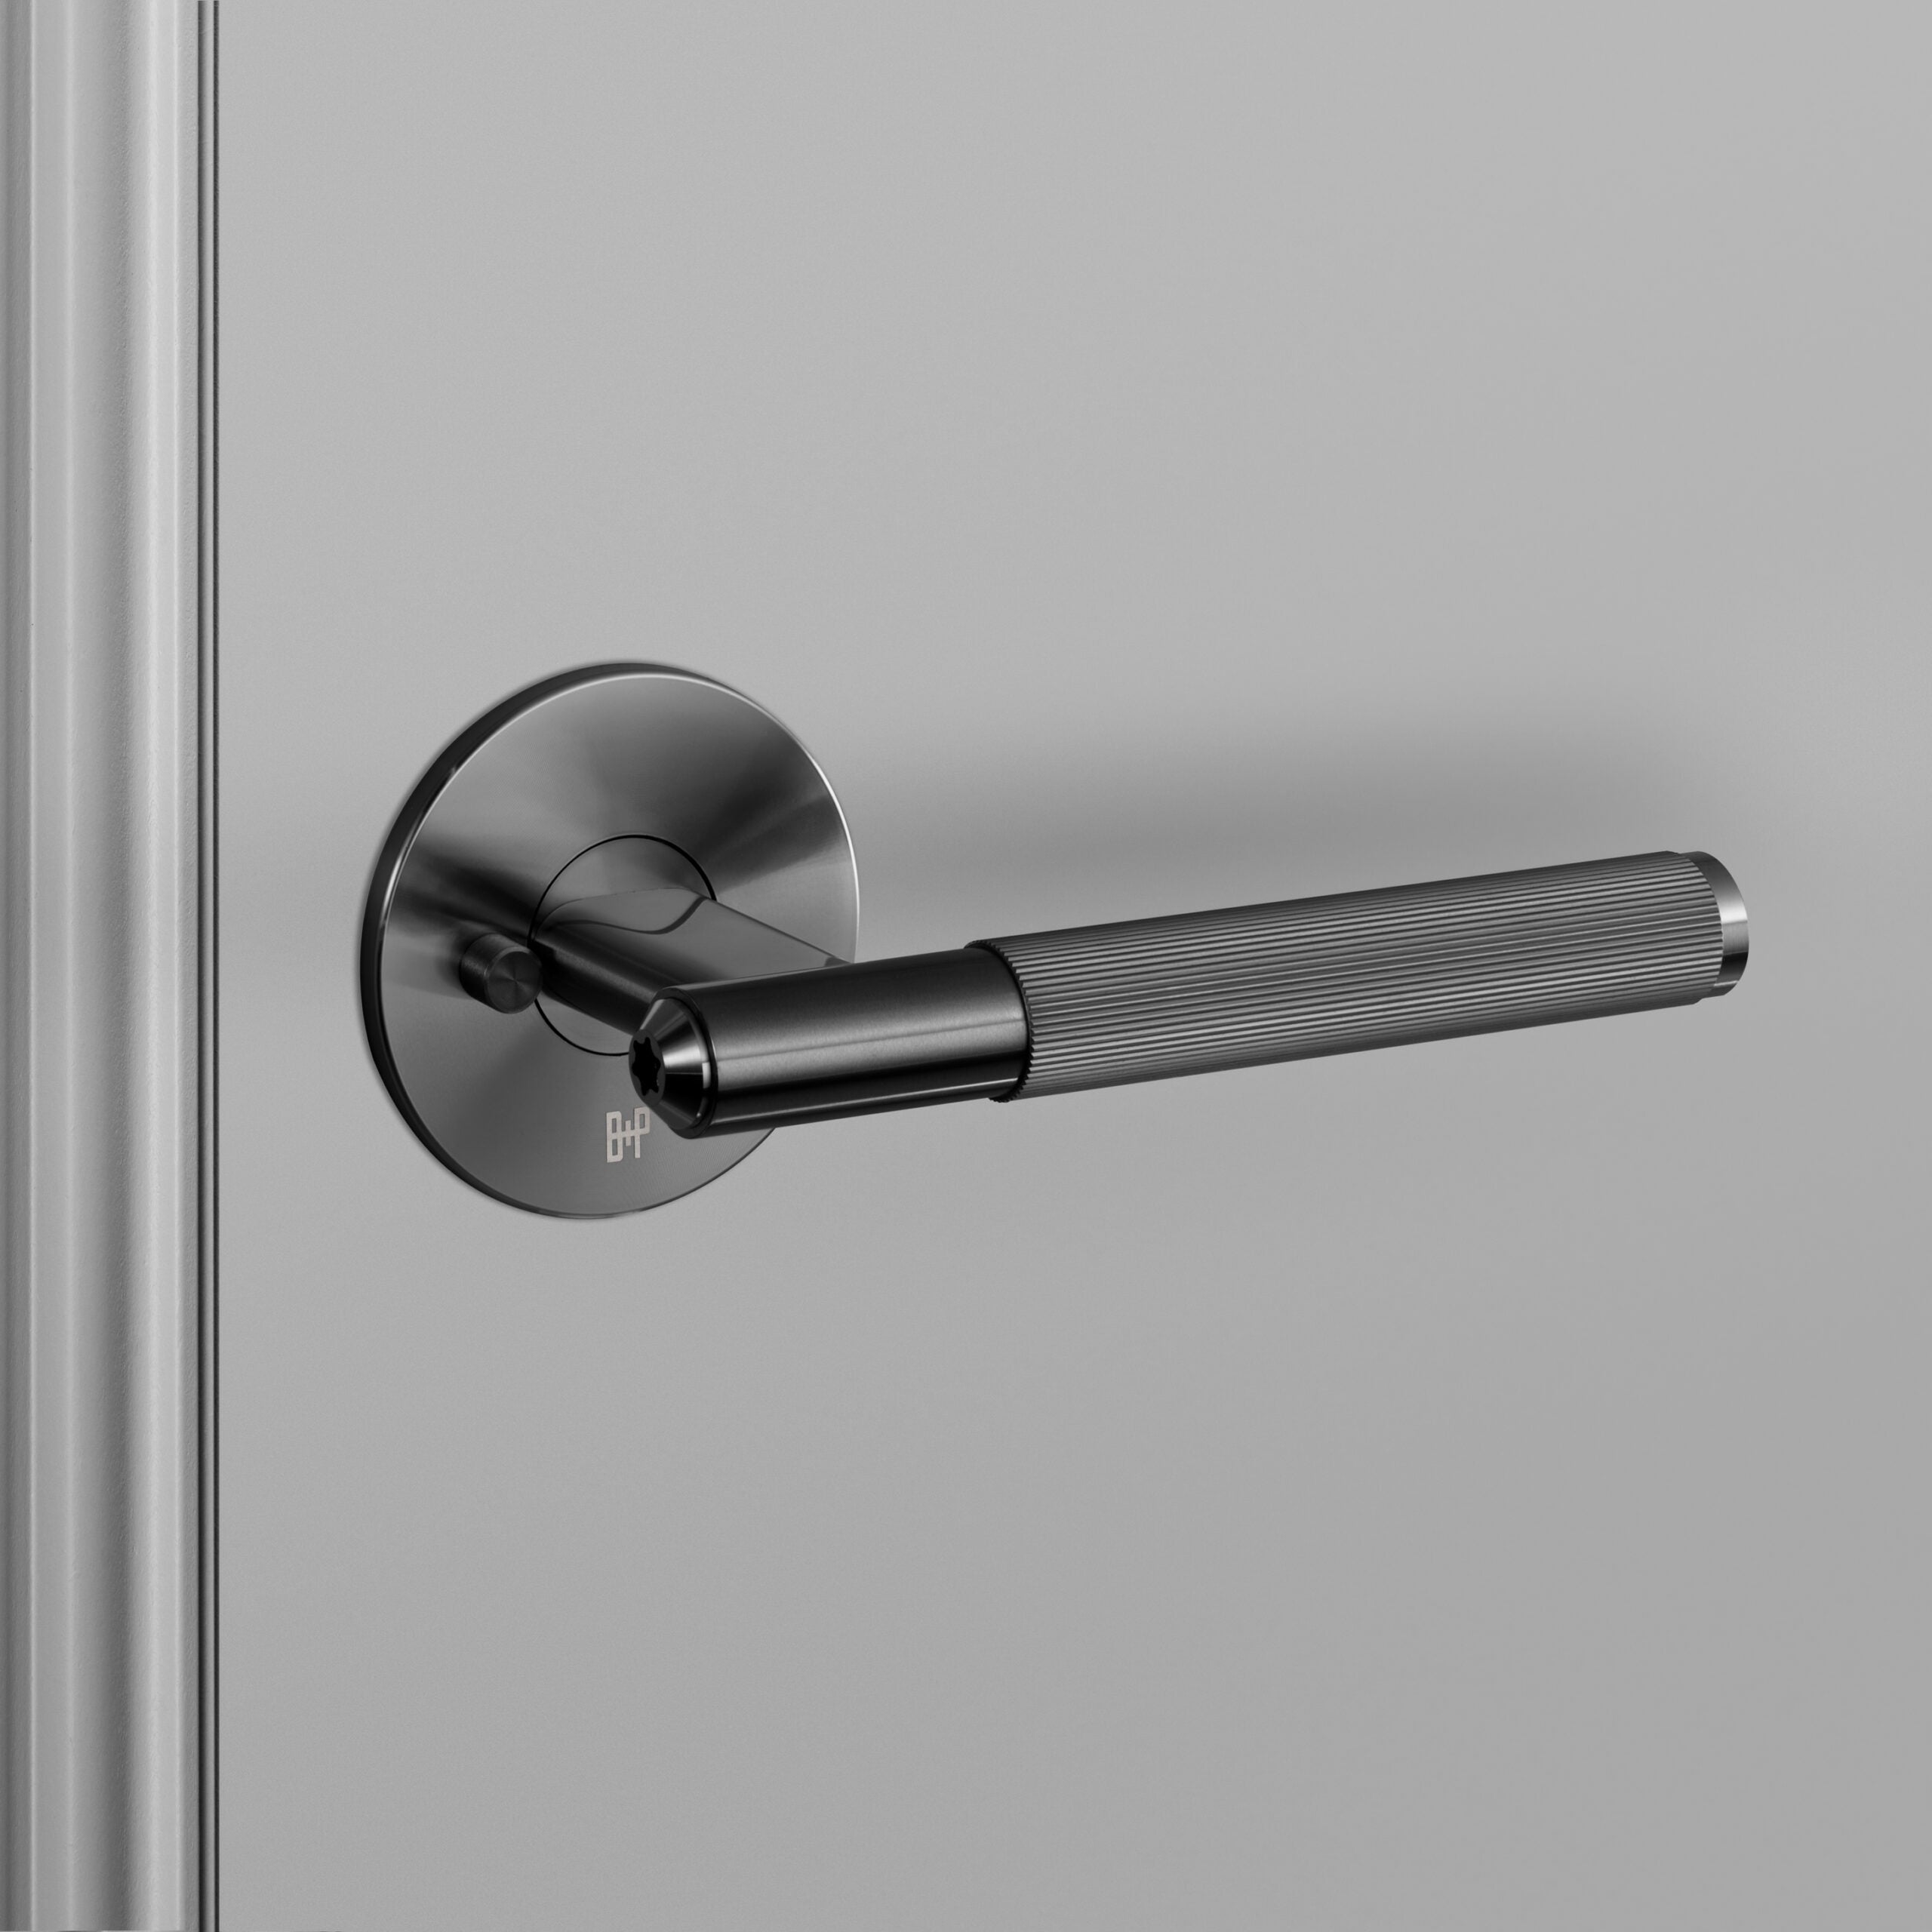 Buster + Punch Conventional Door Handle, Cross Design - Privacy Type, Brass